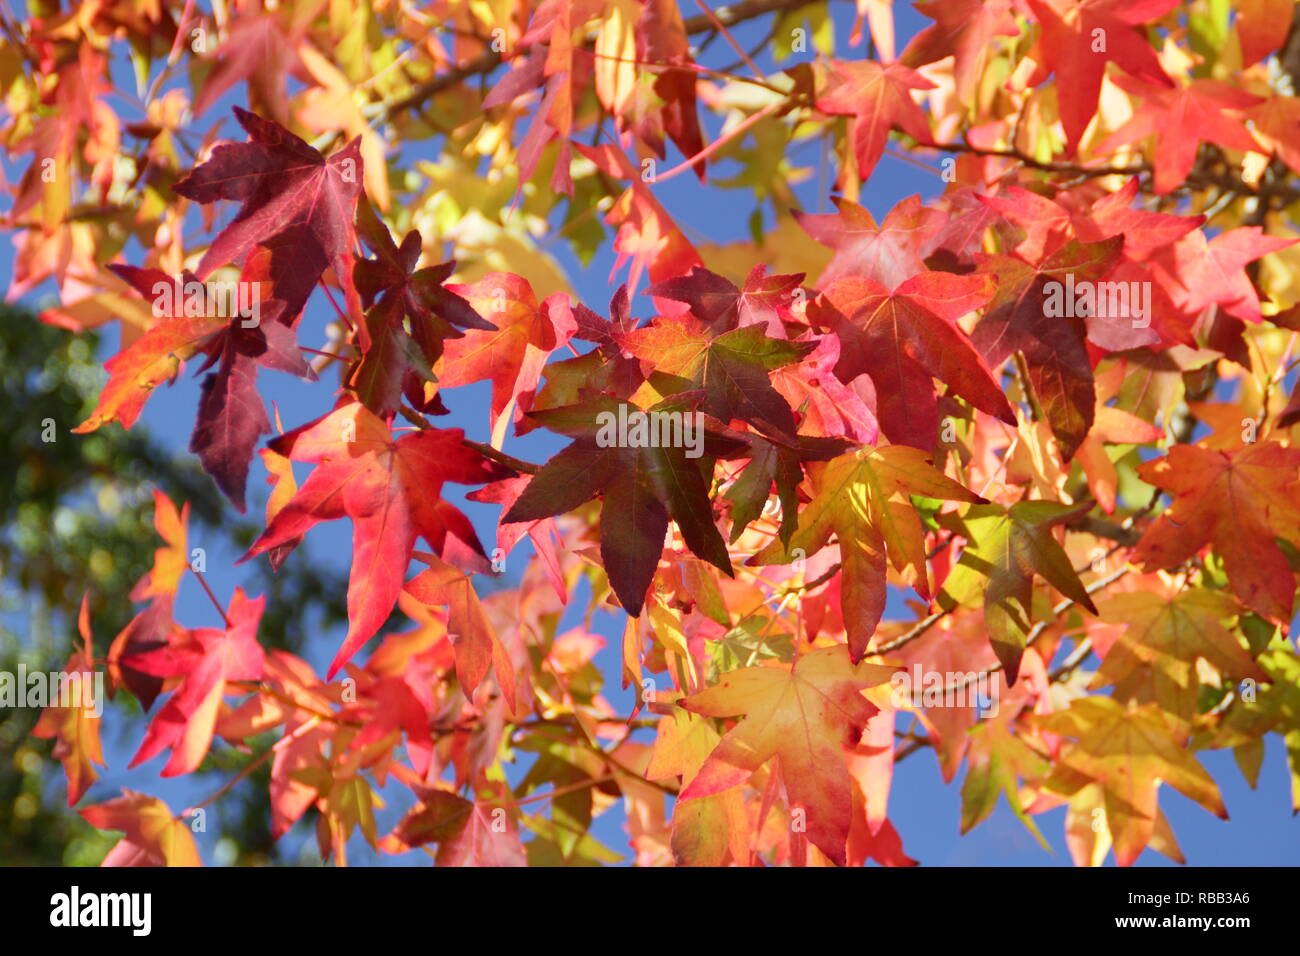 Licuidambar Styraciflua. Bunter Herbst Laub der Sweet Gum Tree im Oktober, Großbritannien Stockfoto